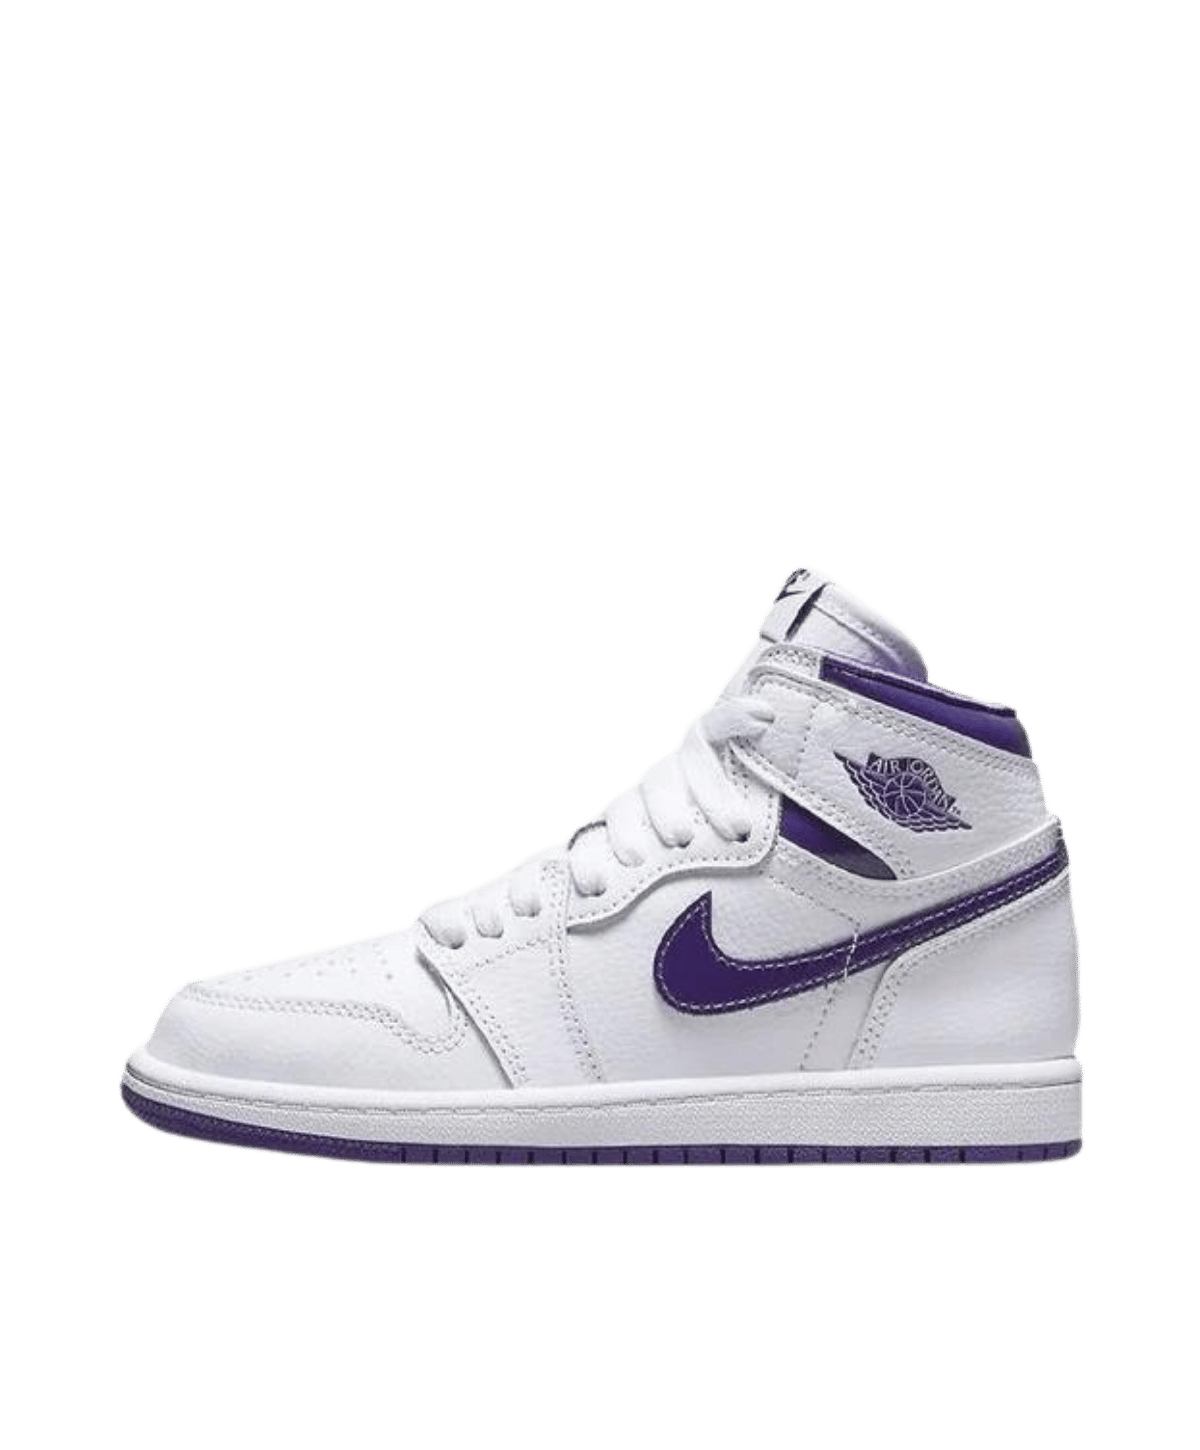 Air Jordan 1 High Kids 'Court Purple' side view